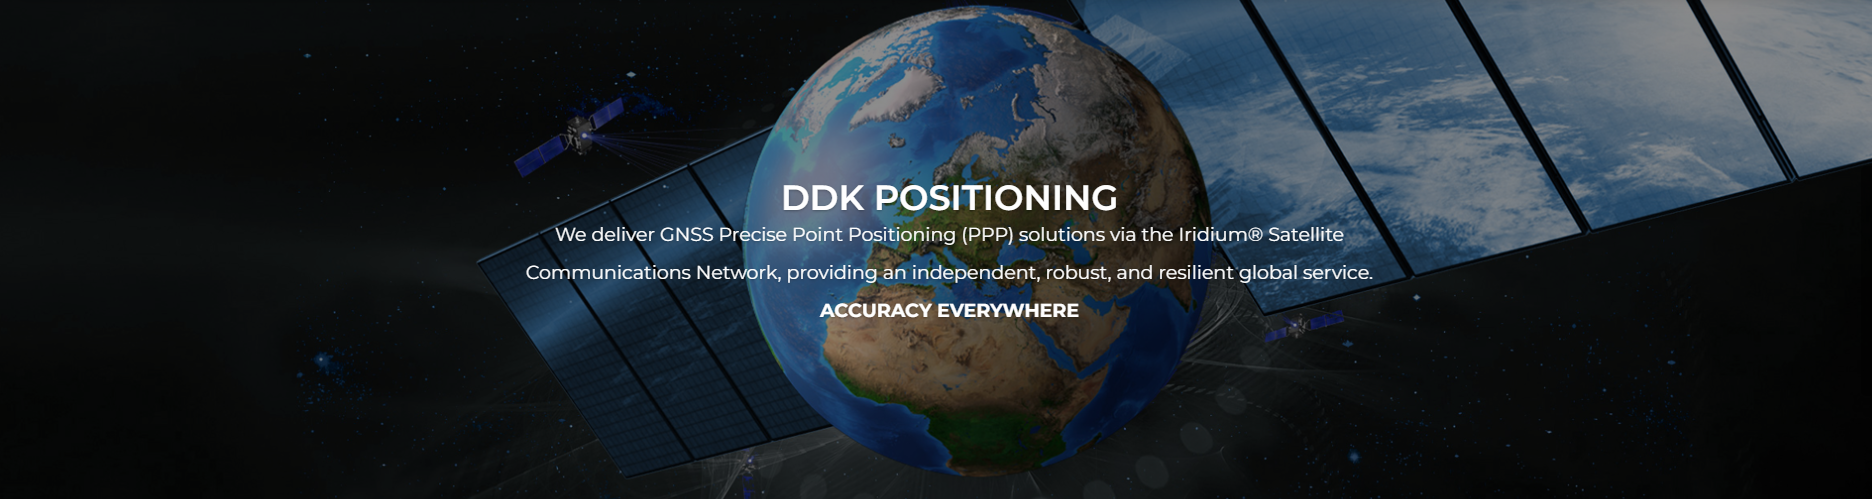 Image credit: DDK Positioning Ltd.